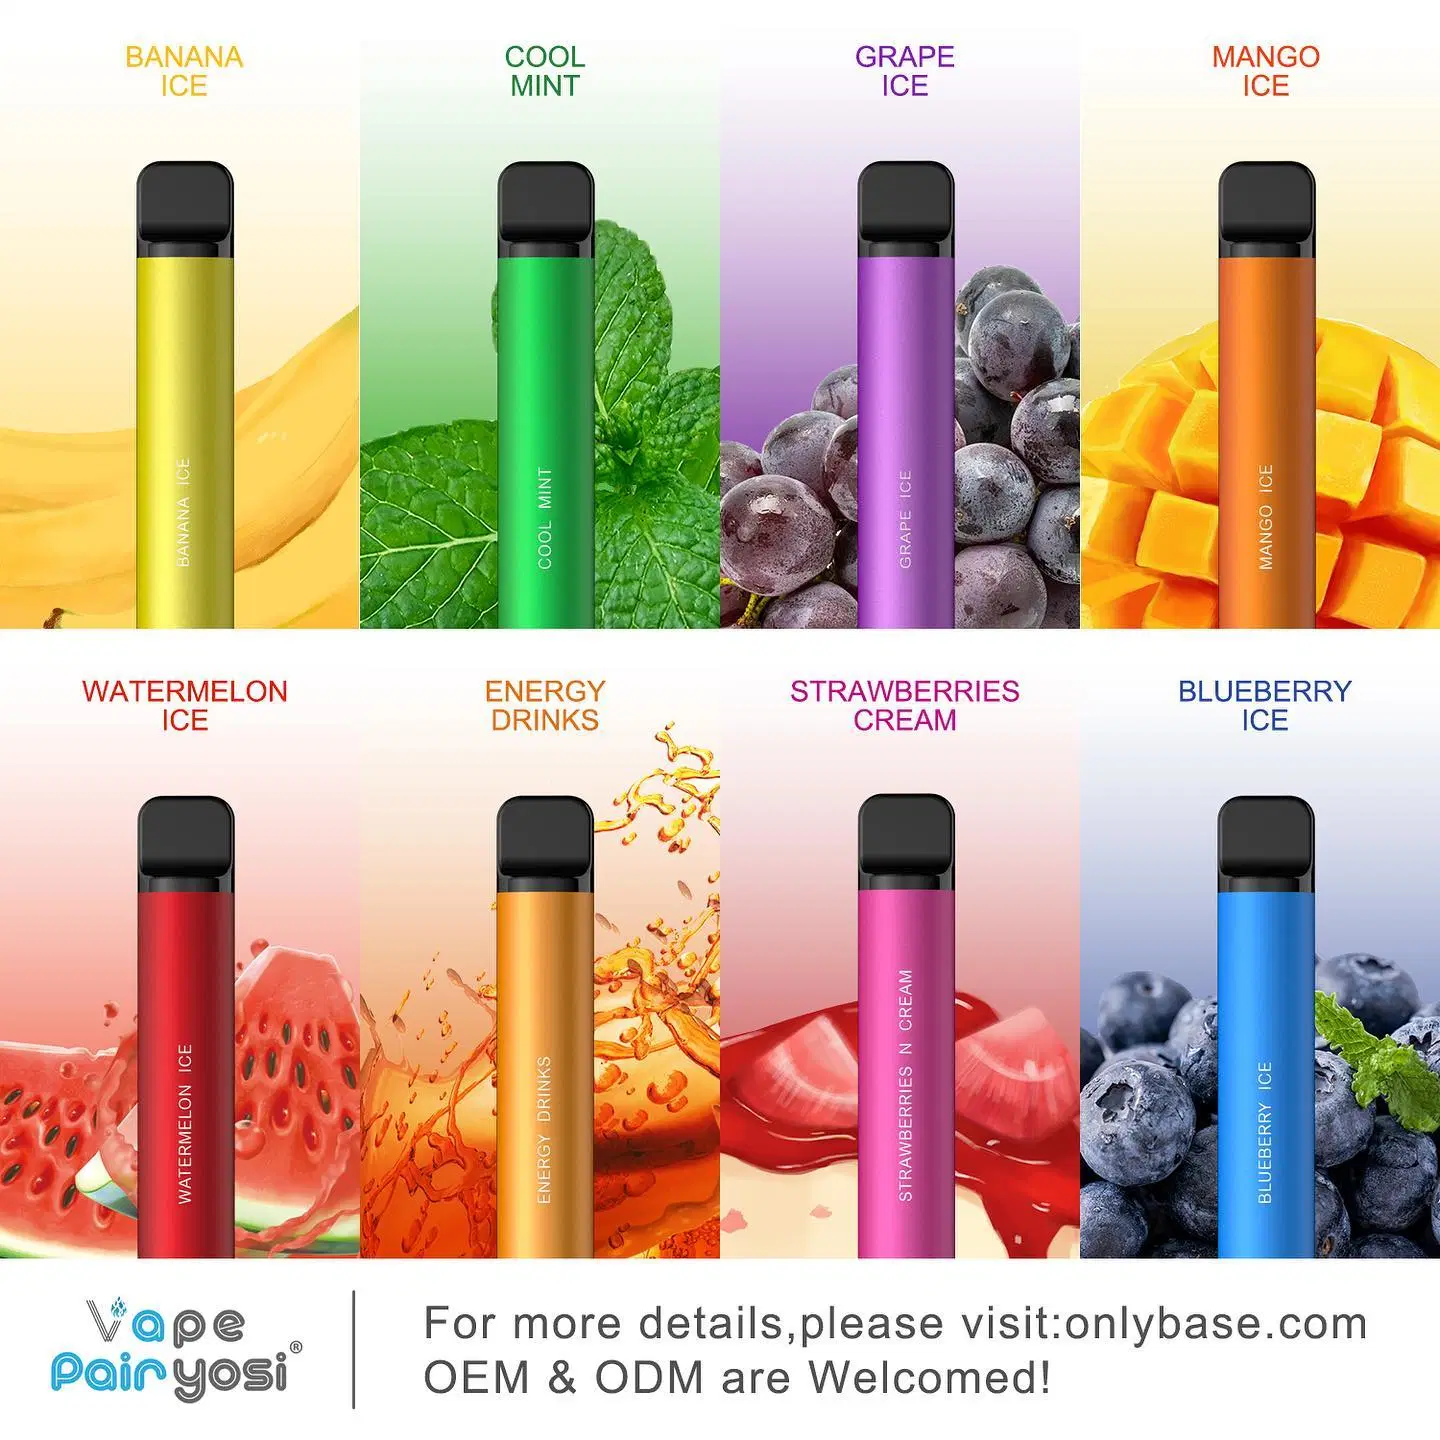 Wecloud Vape New Wholesale/Supplier Elf 800 Mini vape Vaporizer Pod Electronic E-Cig Disposable/Chargeable Vape Pen Puff Bar